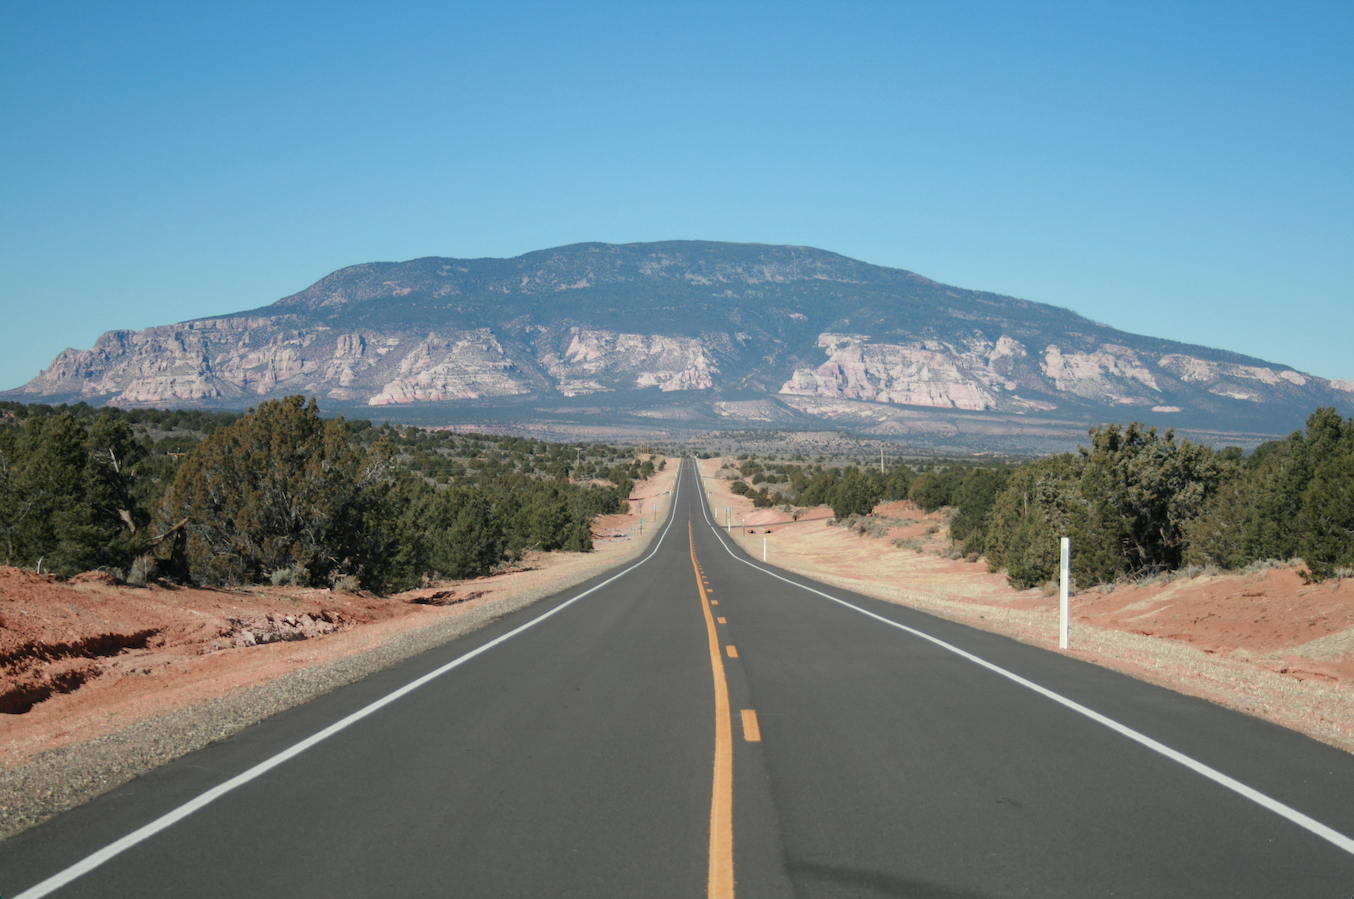 Road to Navajo Mountain